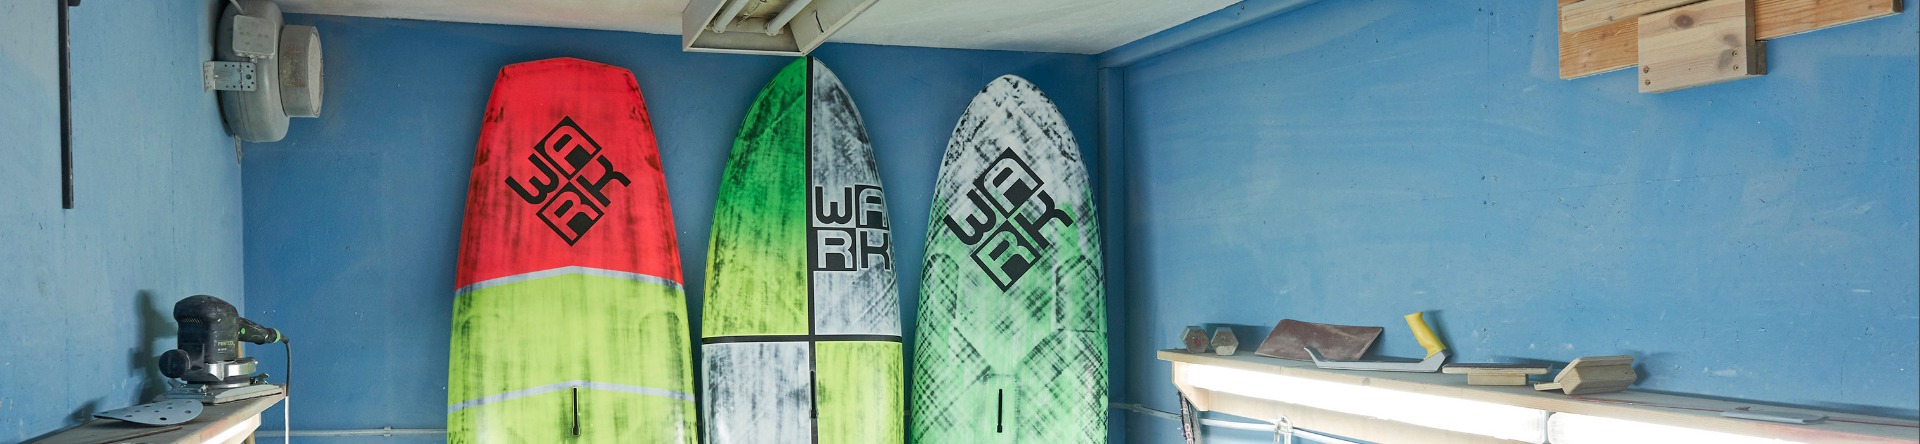 WARK Surfboards